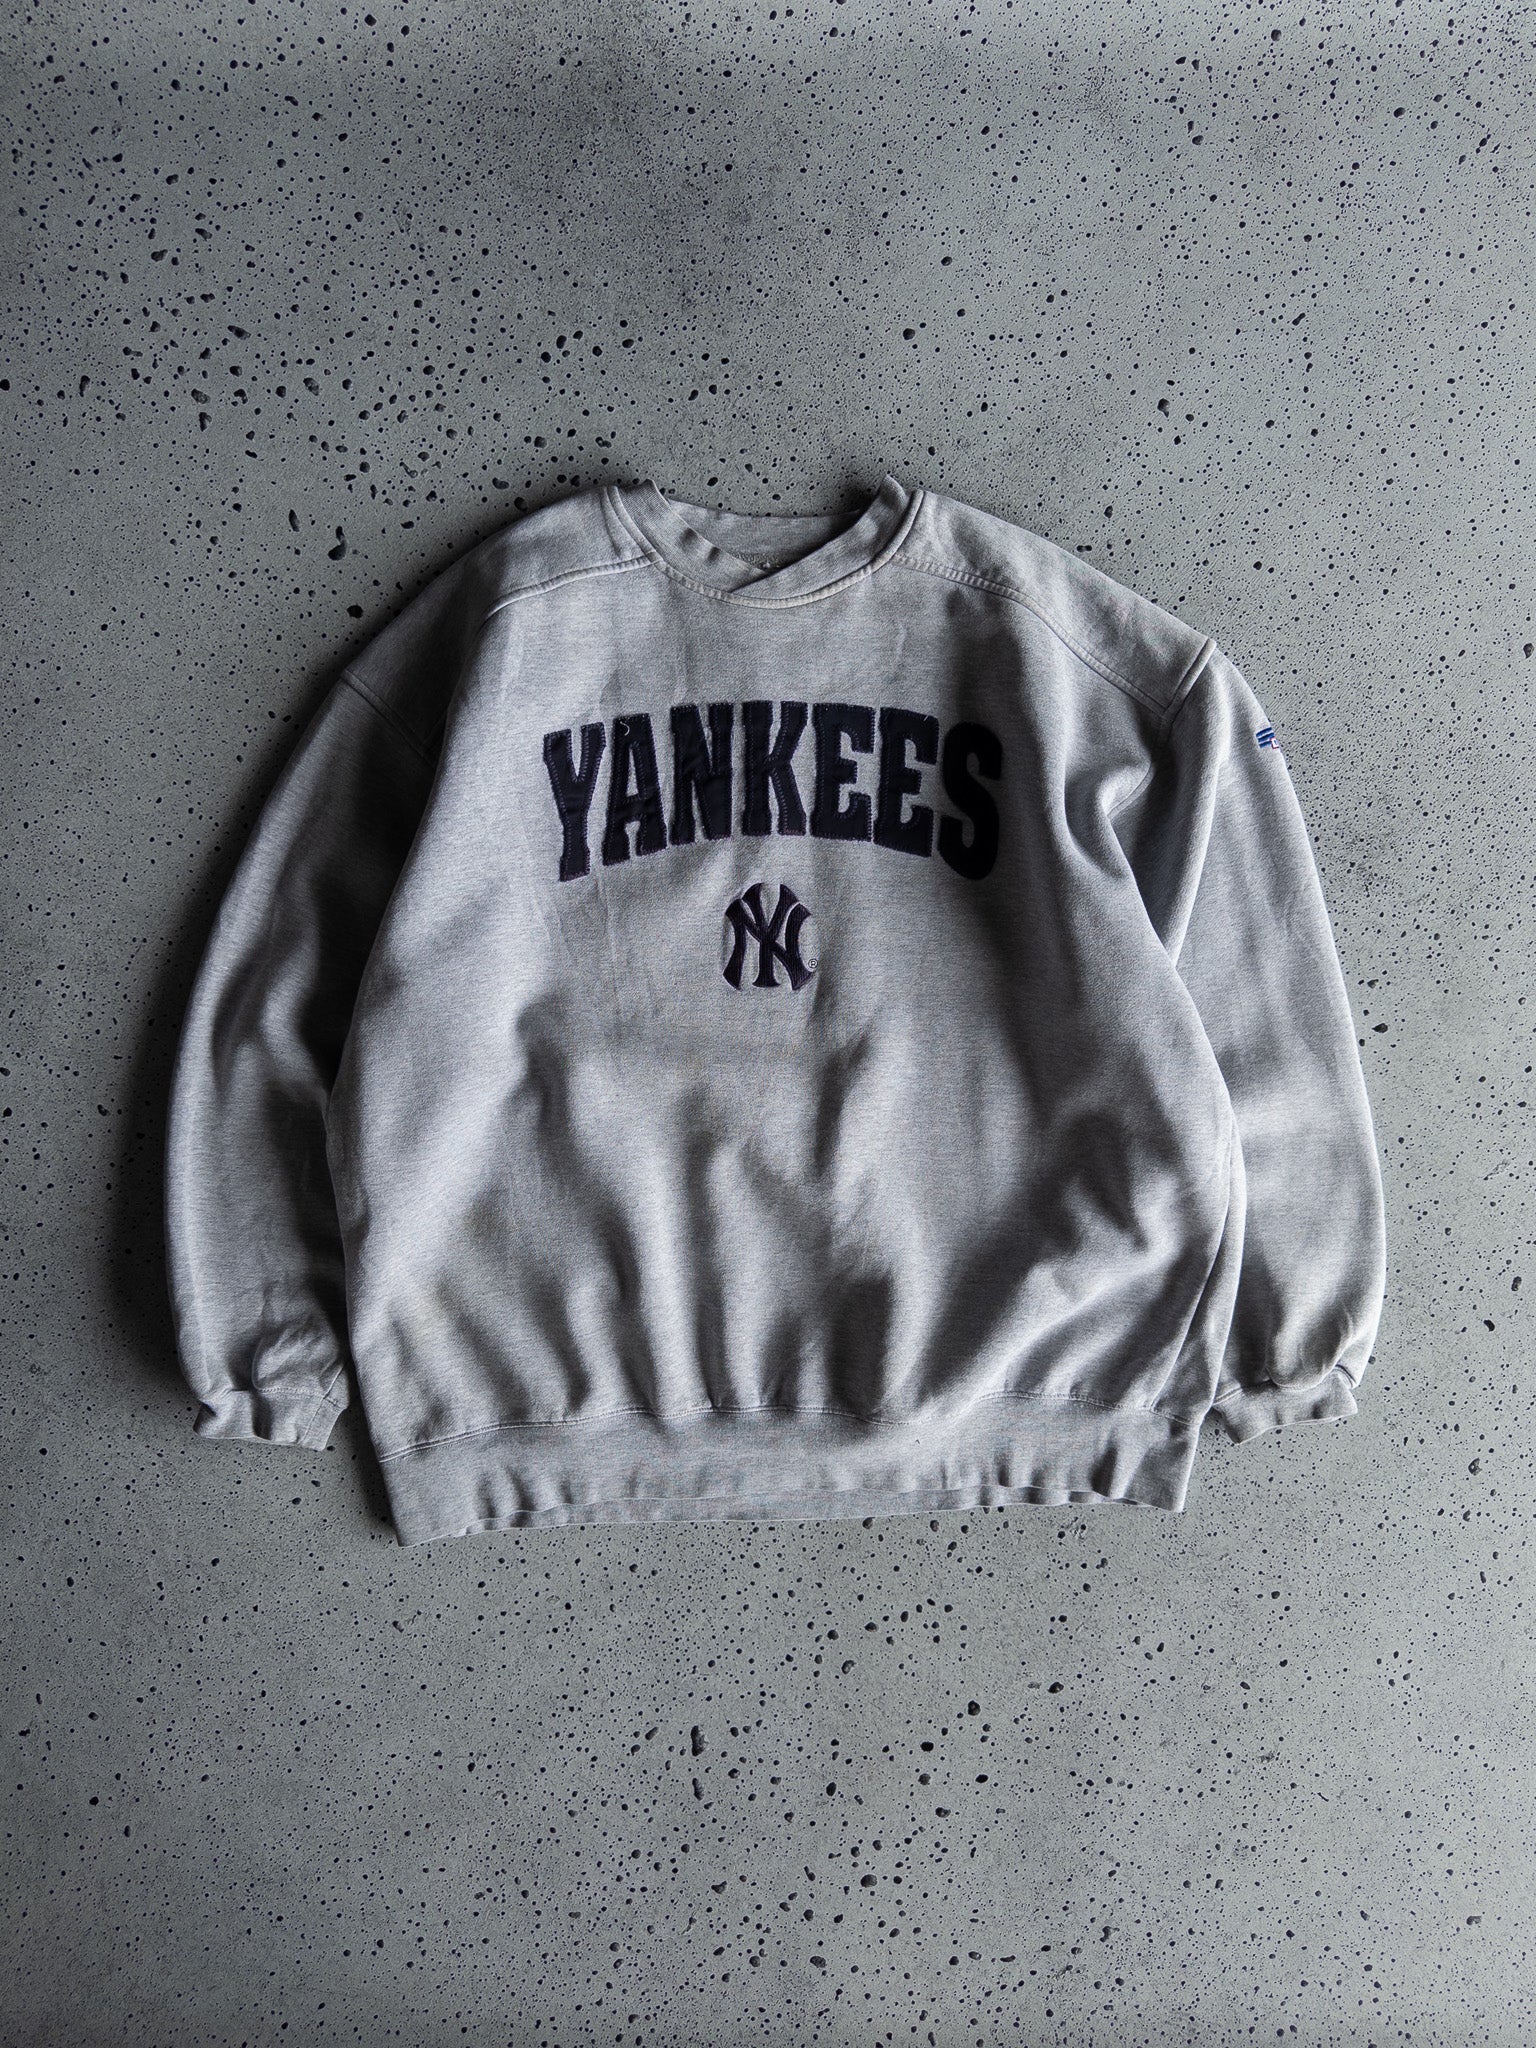 Vintage New York Yankees Sweatshirt (XXL)